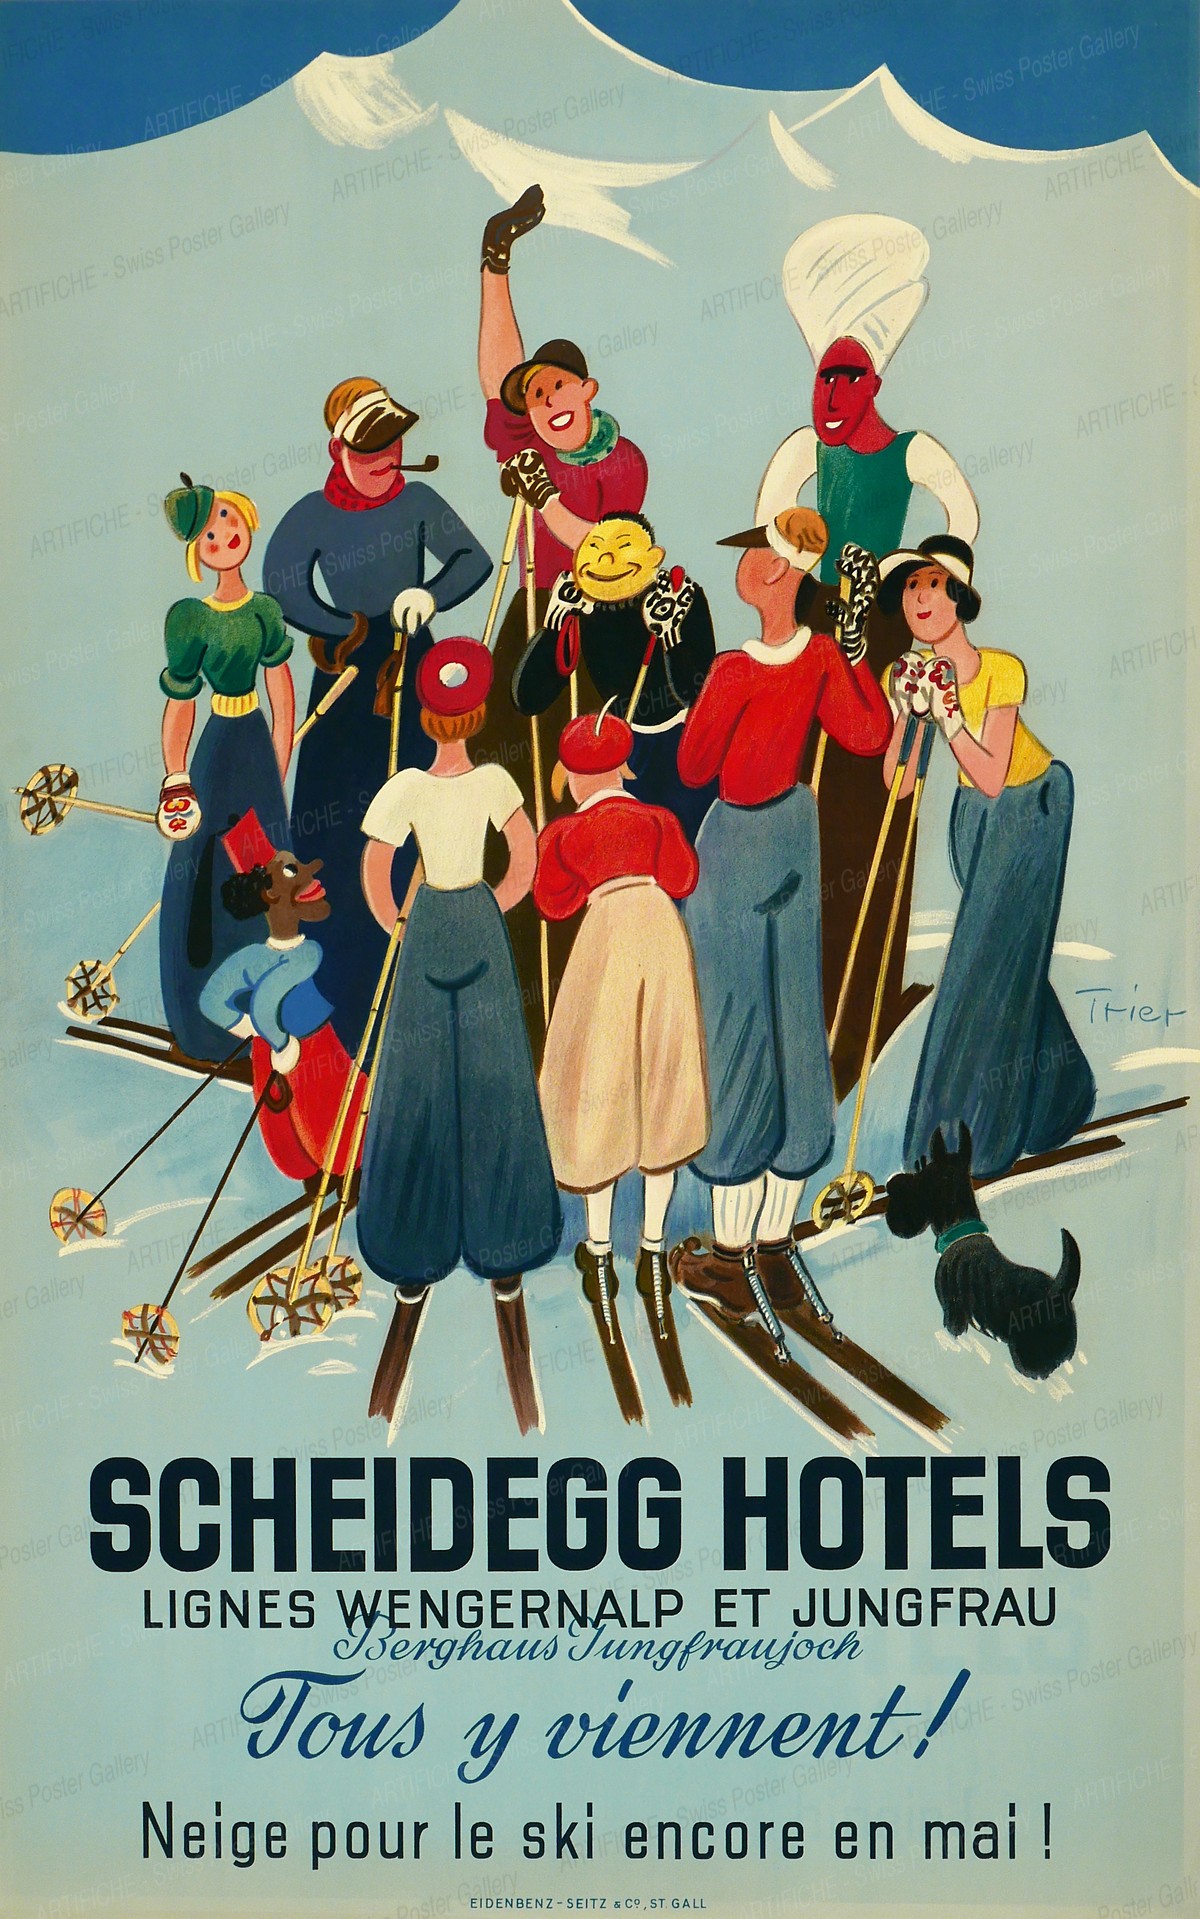 Scheidegg Hotels – Tous y viennent! Lignes Wengernalp et Jungfrau, Walter Trier